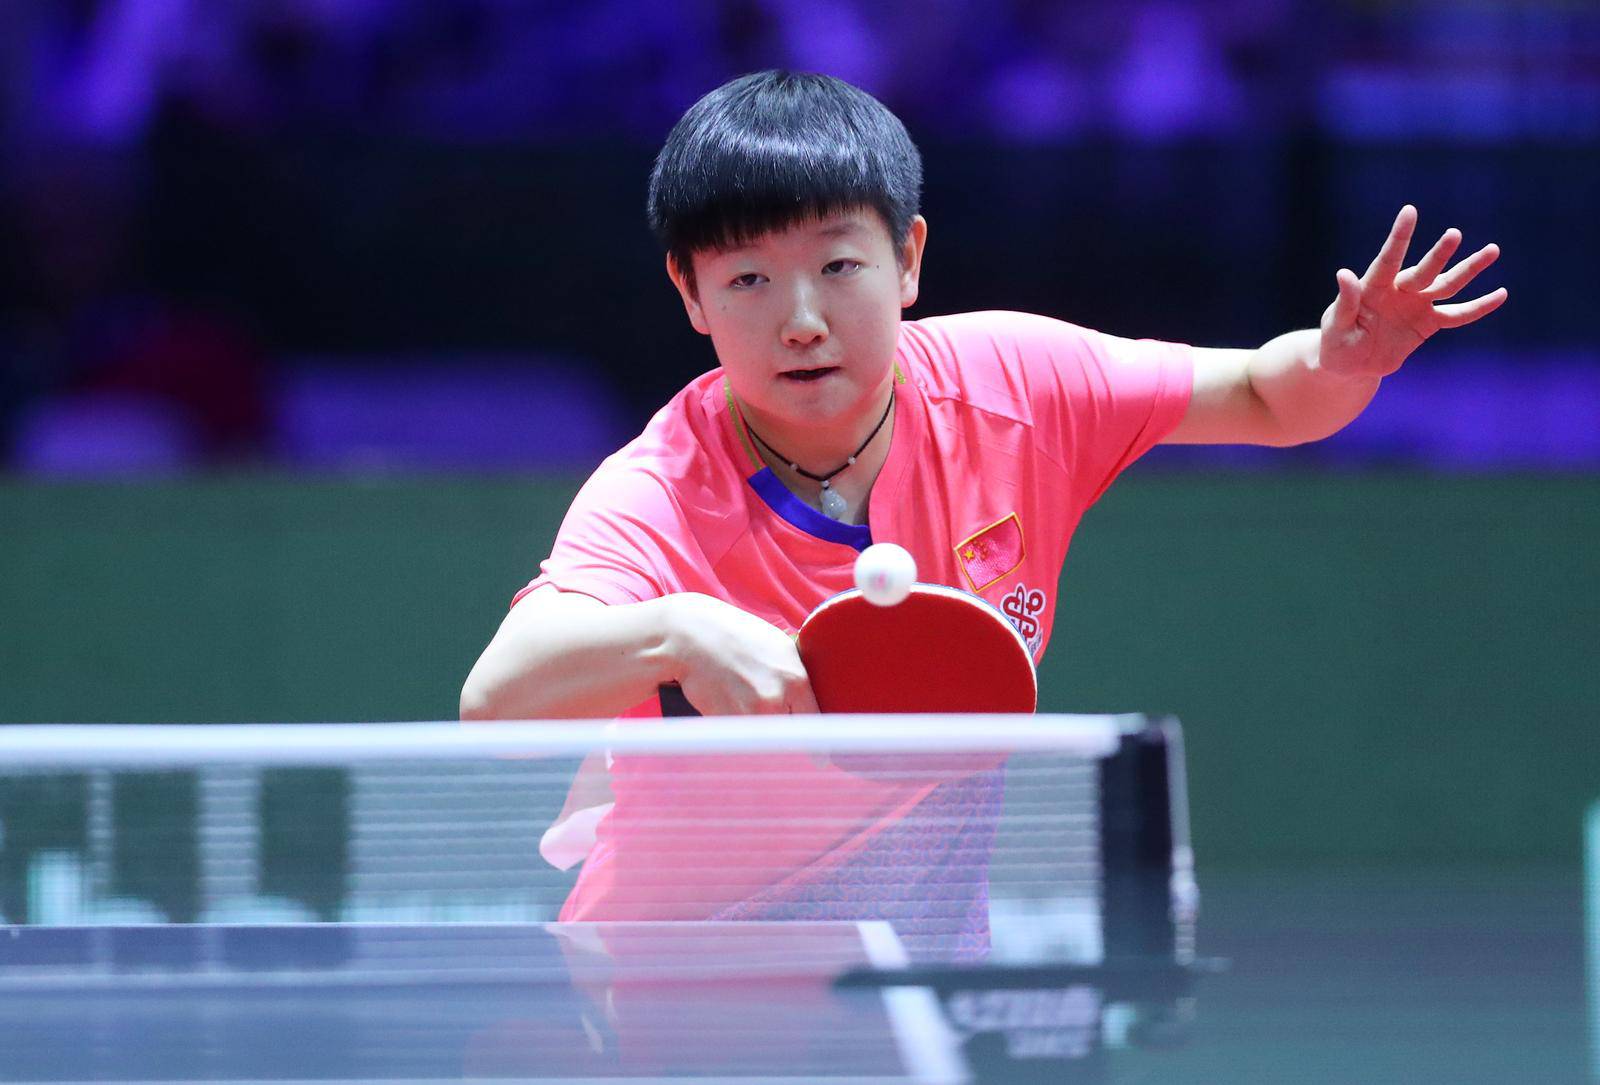 Budimpešta: Meč ženskog četvrtfinala na Svjetskom prvenstvu, Wang Manyu - Sun Yingsha